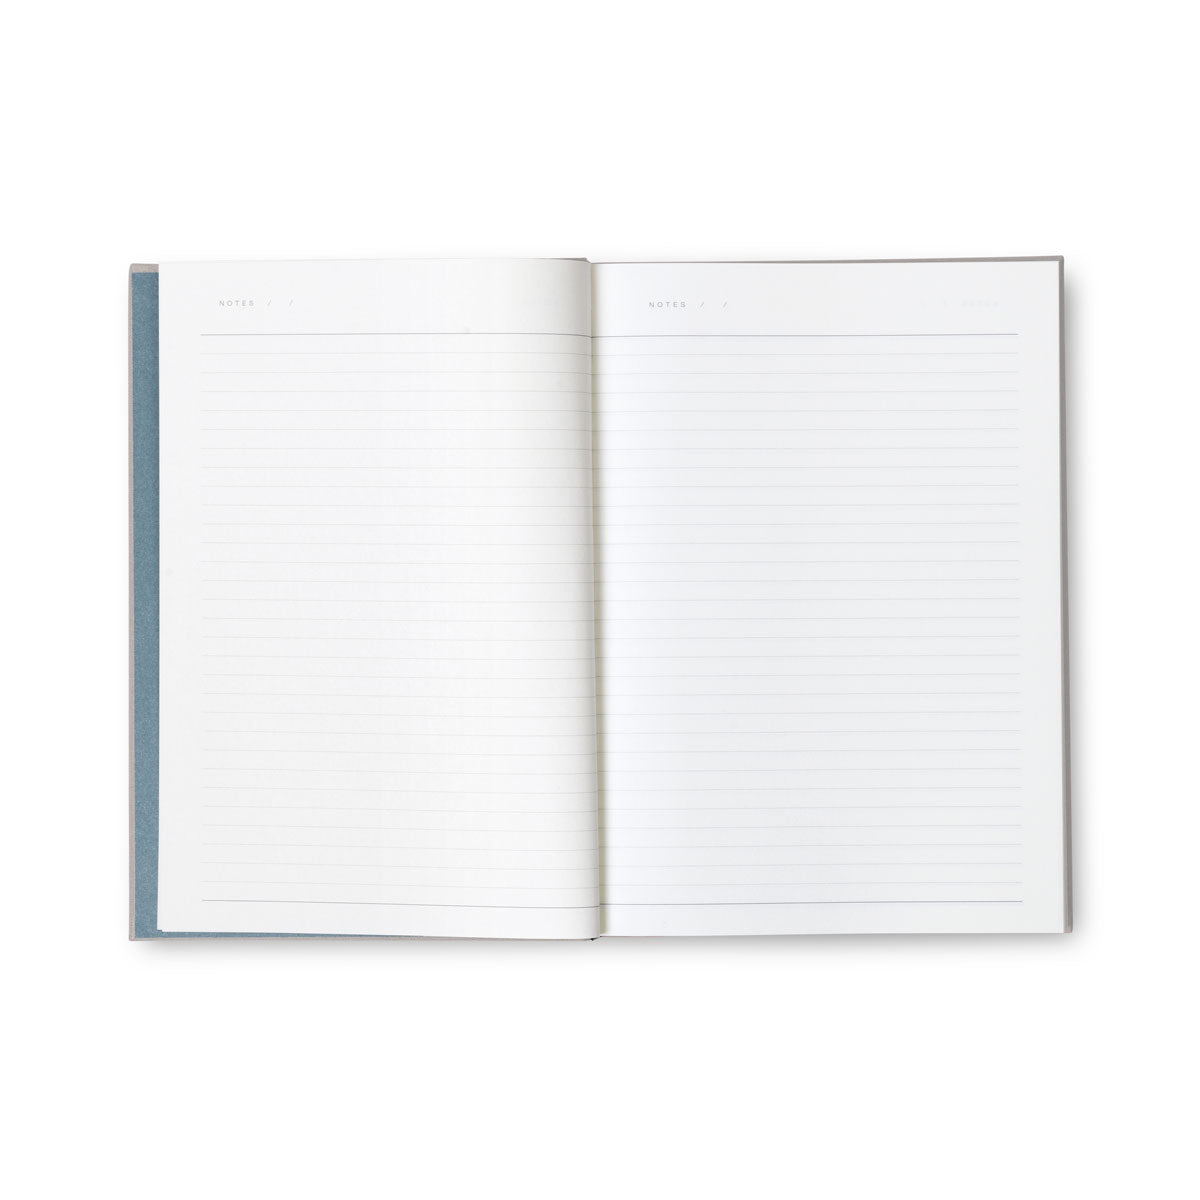 NOTEM BEA Notebook, Medium - Light Grey